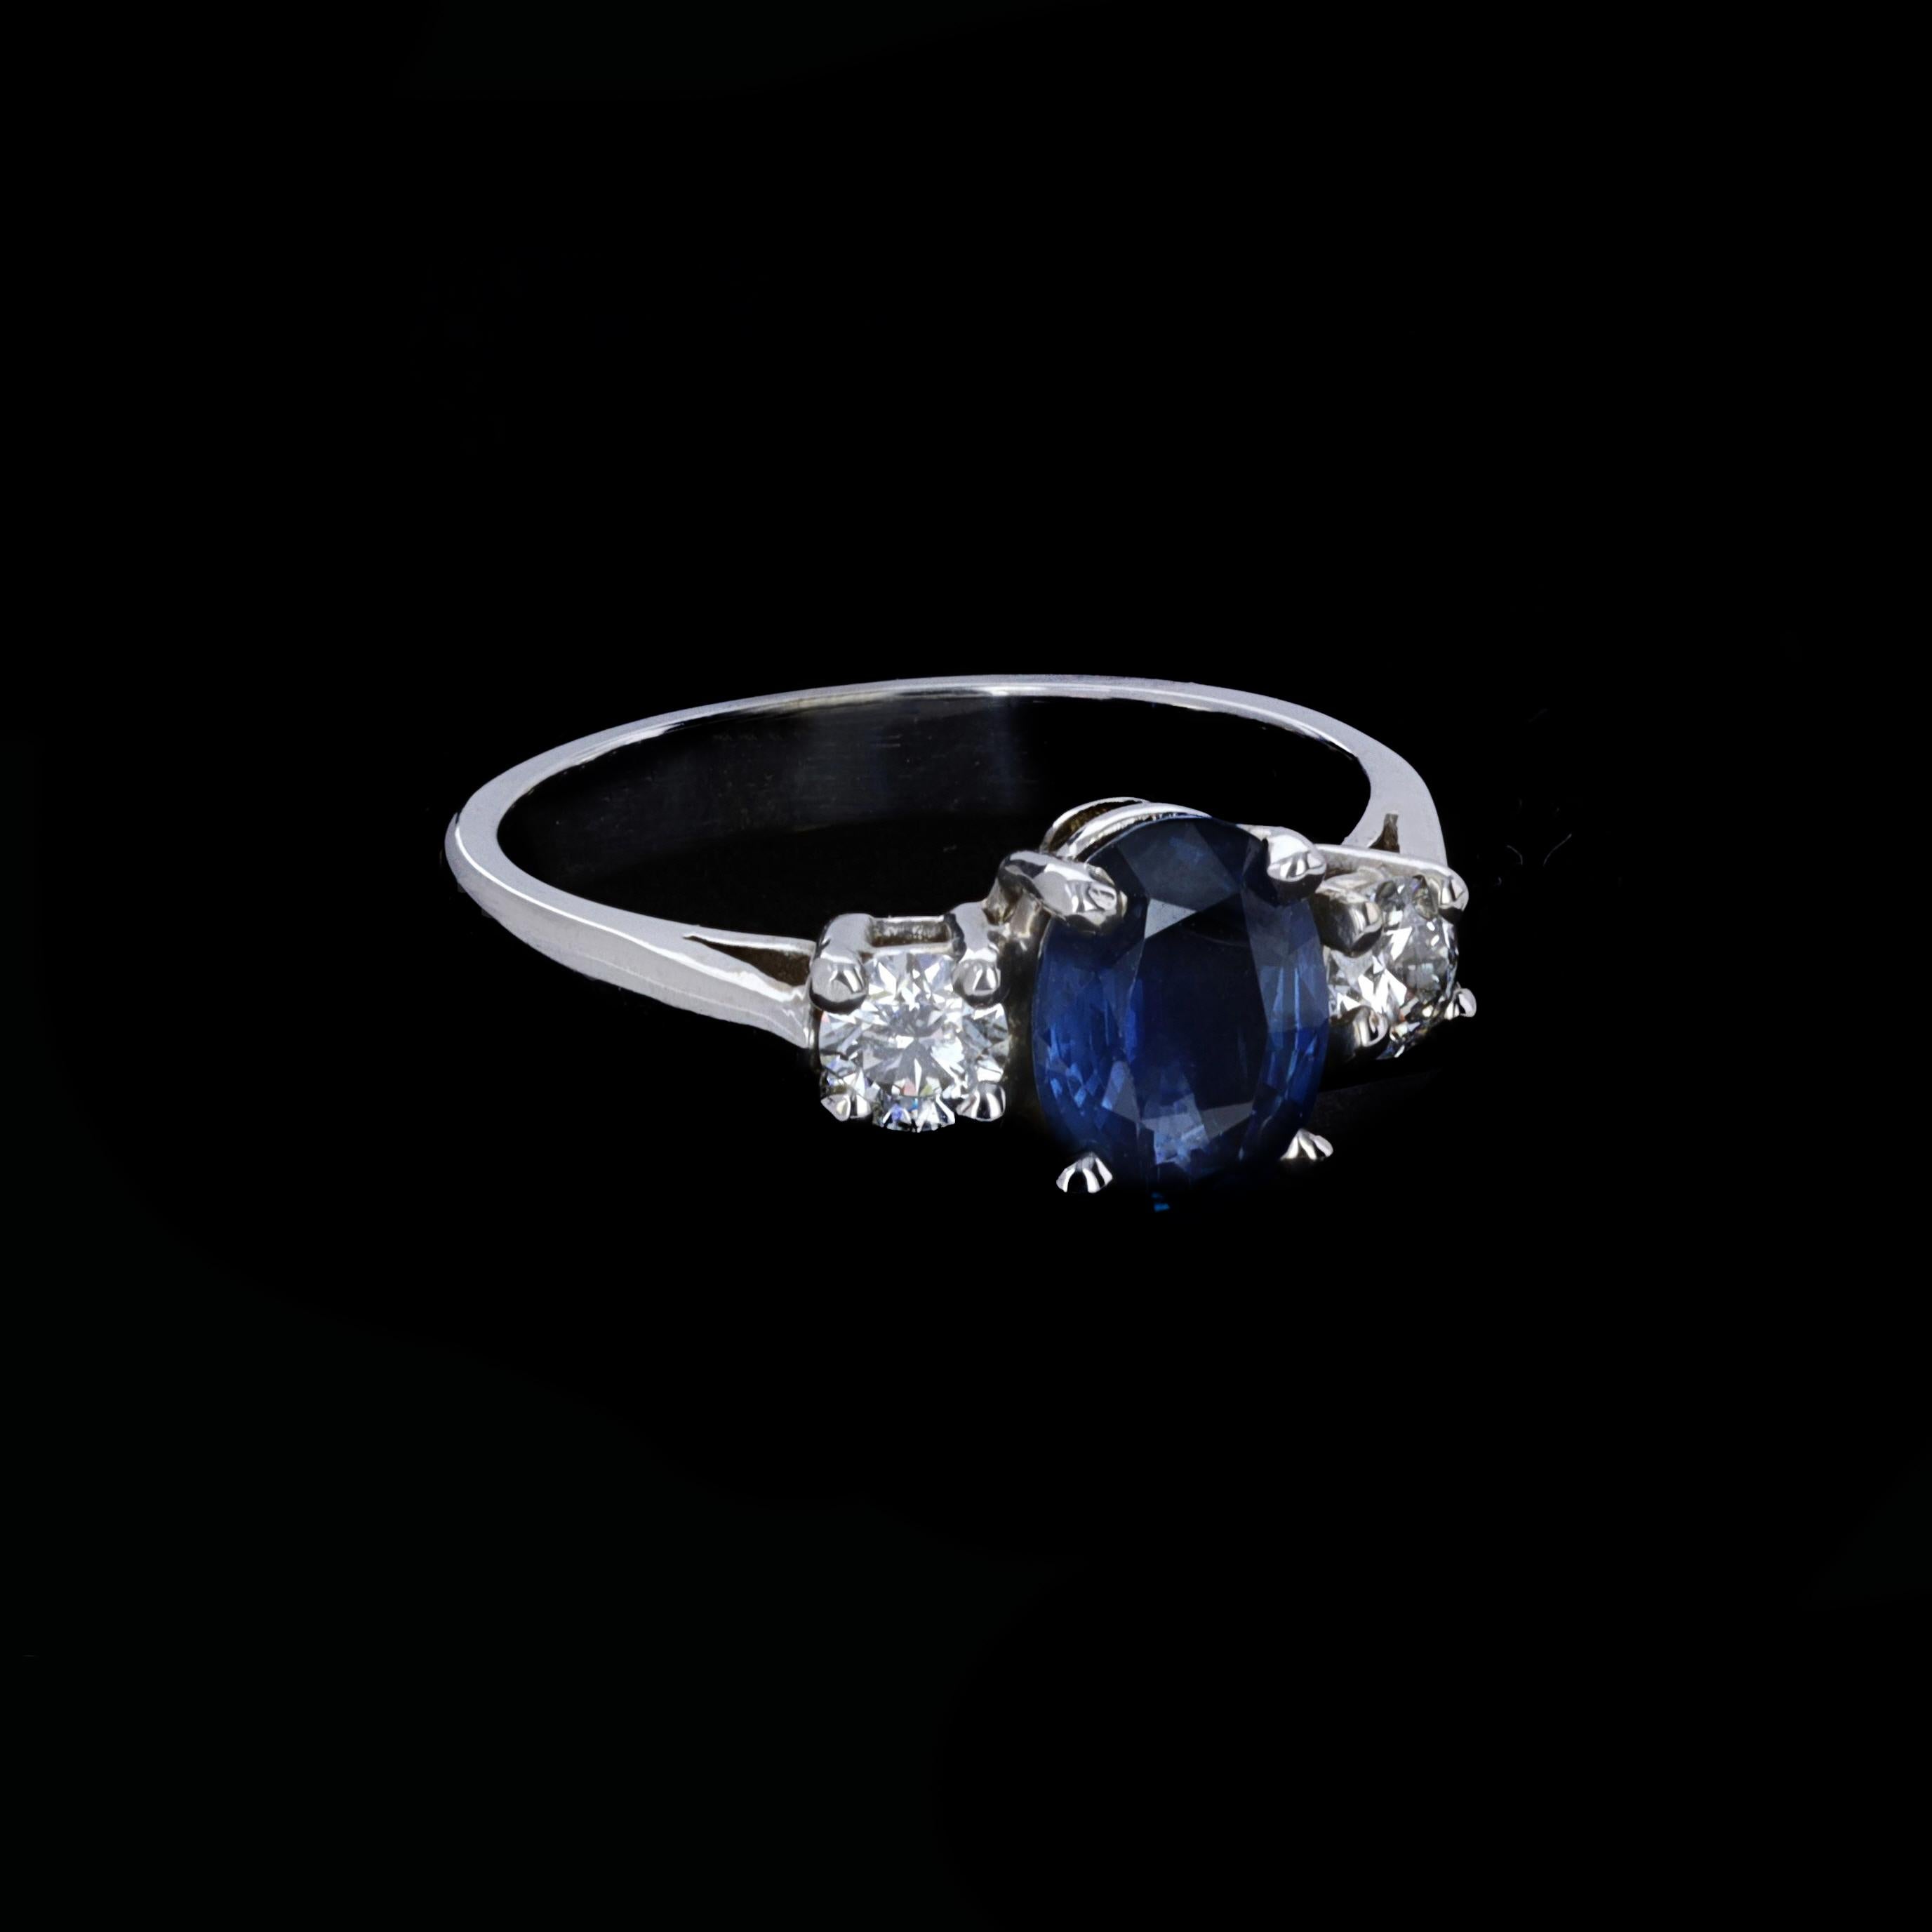 Romantic Vintage Oval Cut Sapphire and Diamond Ring